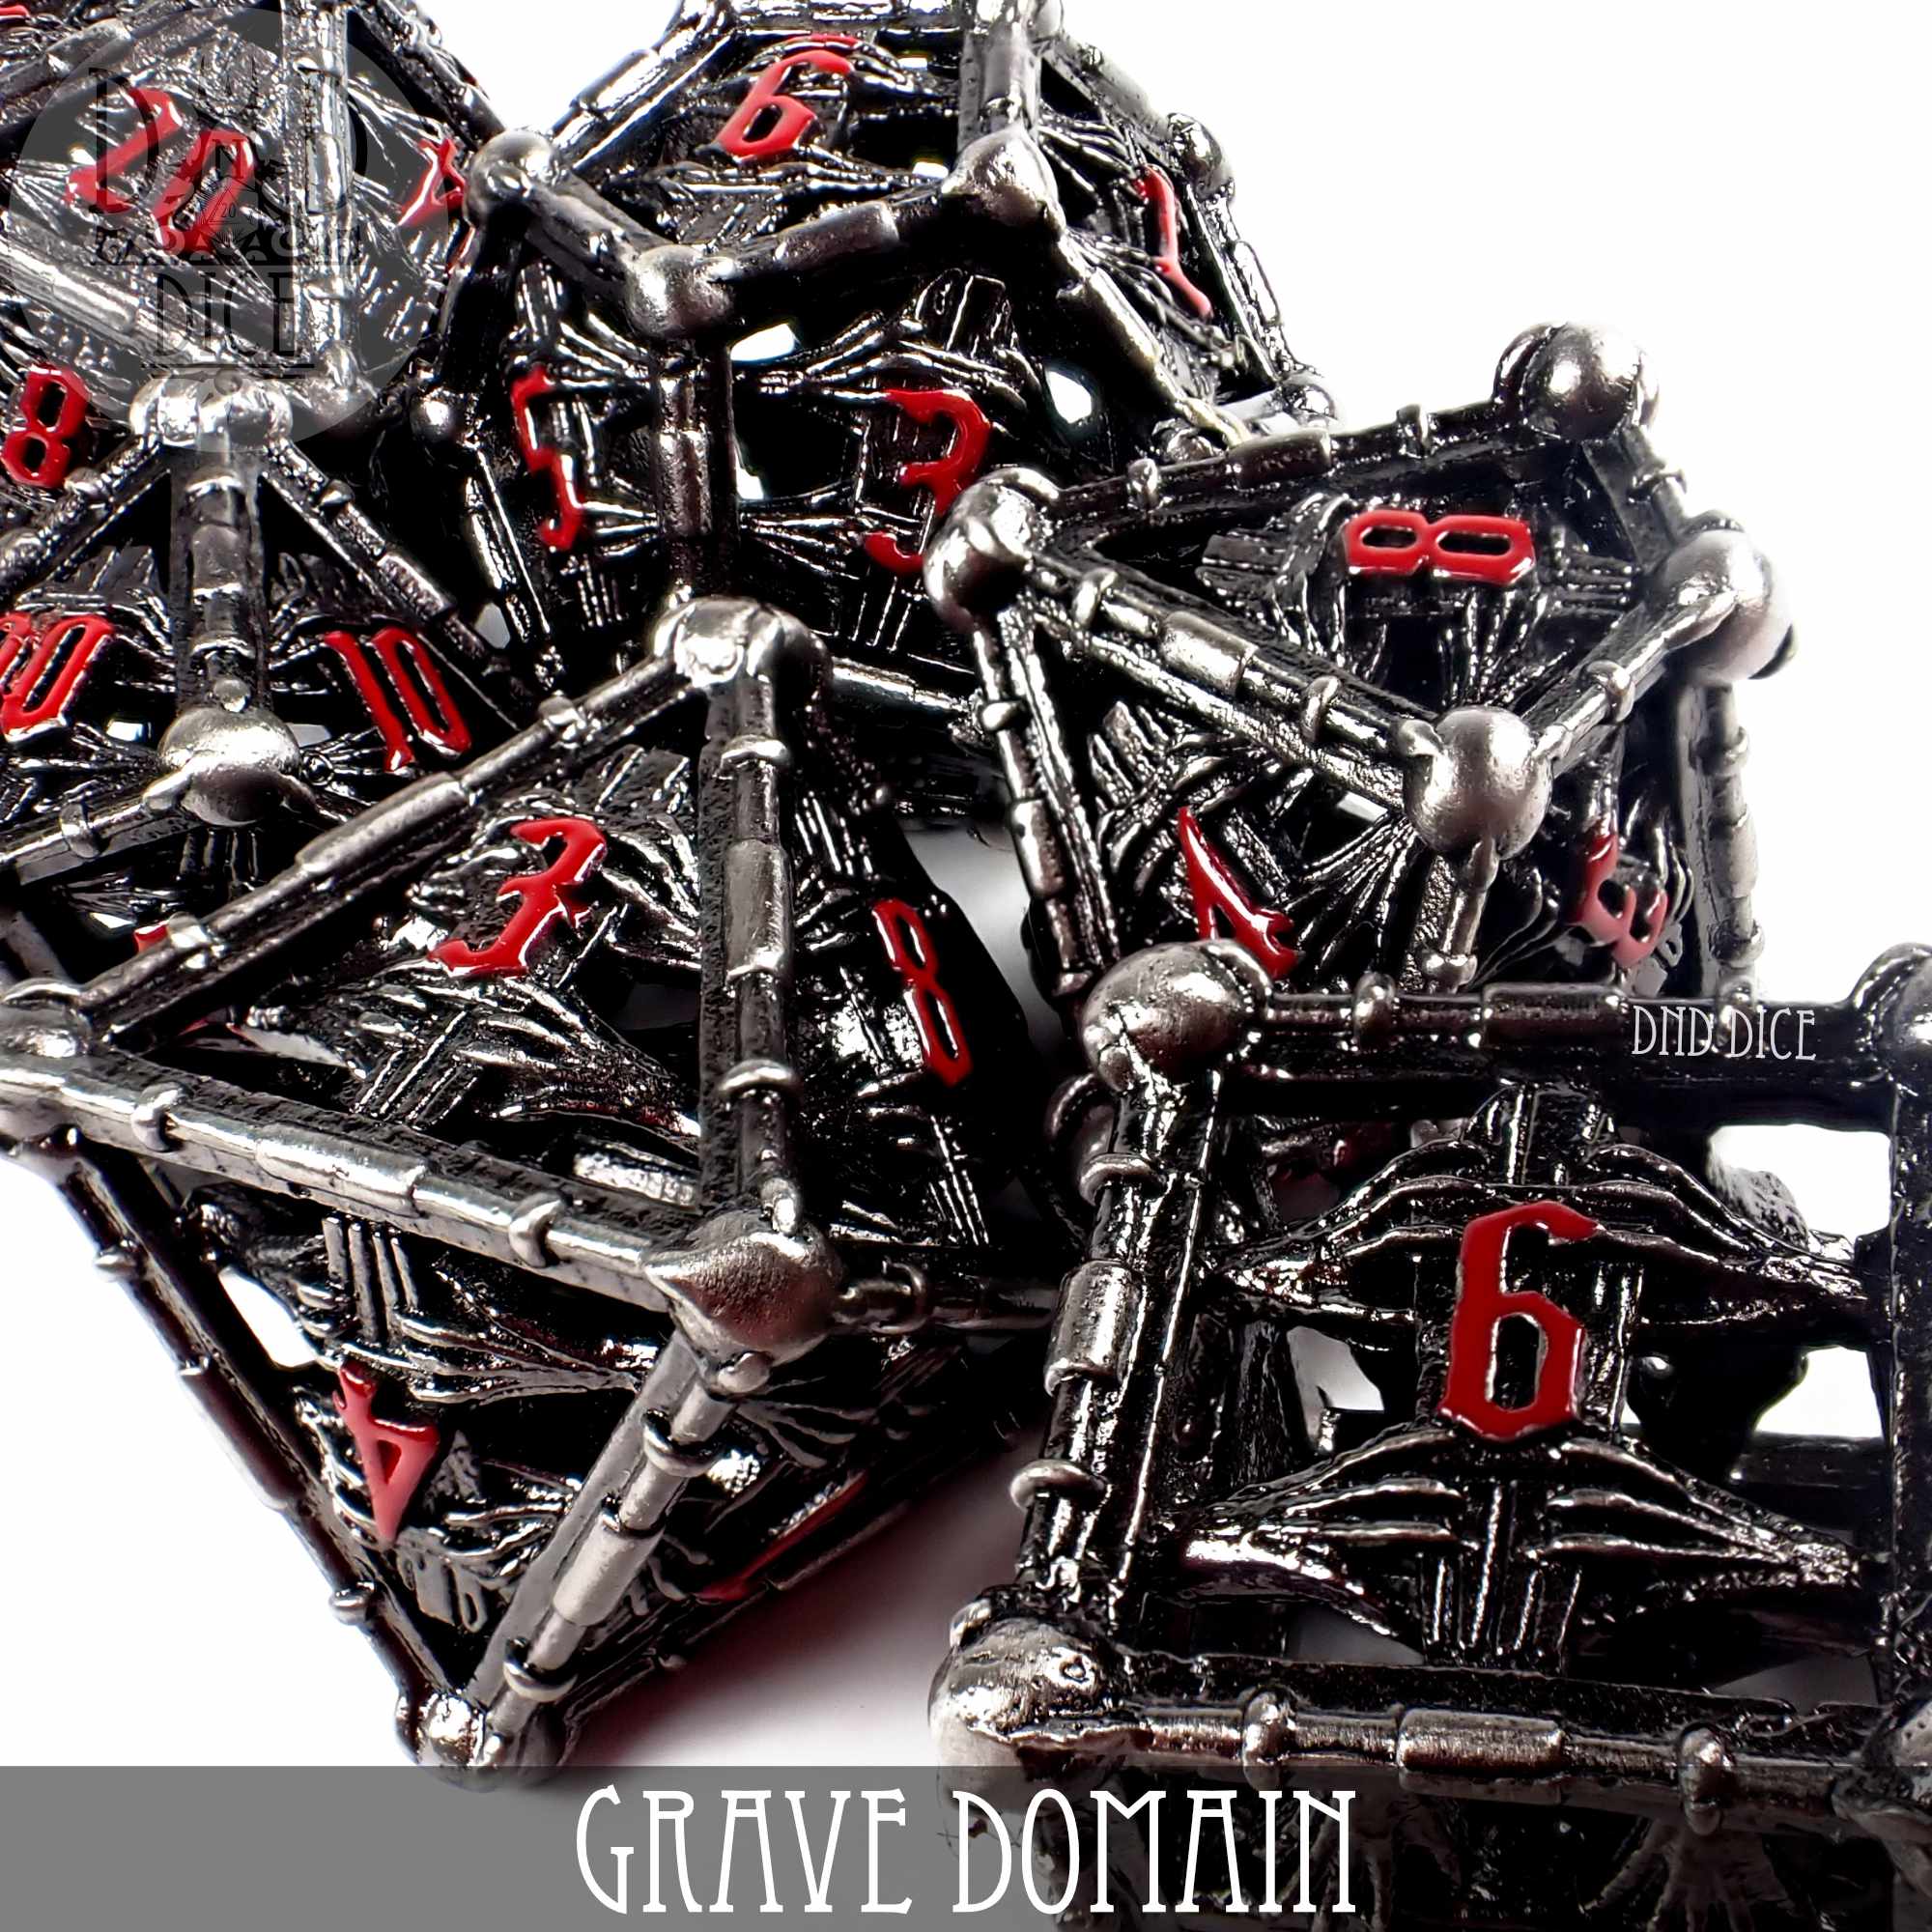 Grave Domain Hollow Metal Dice Set (Gift Box)